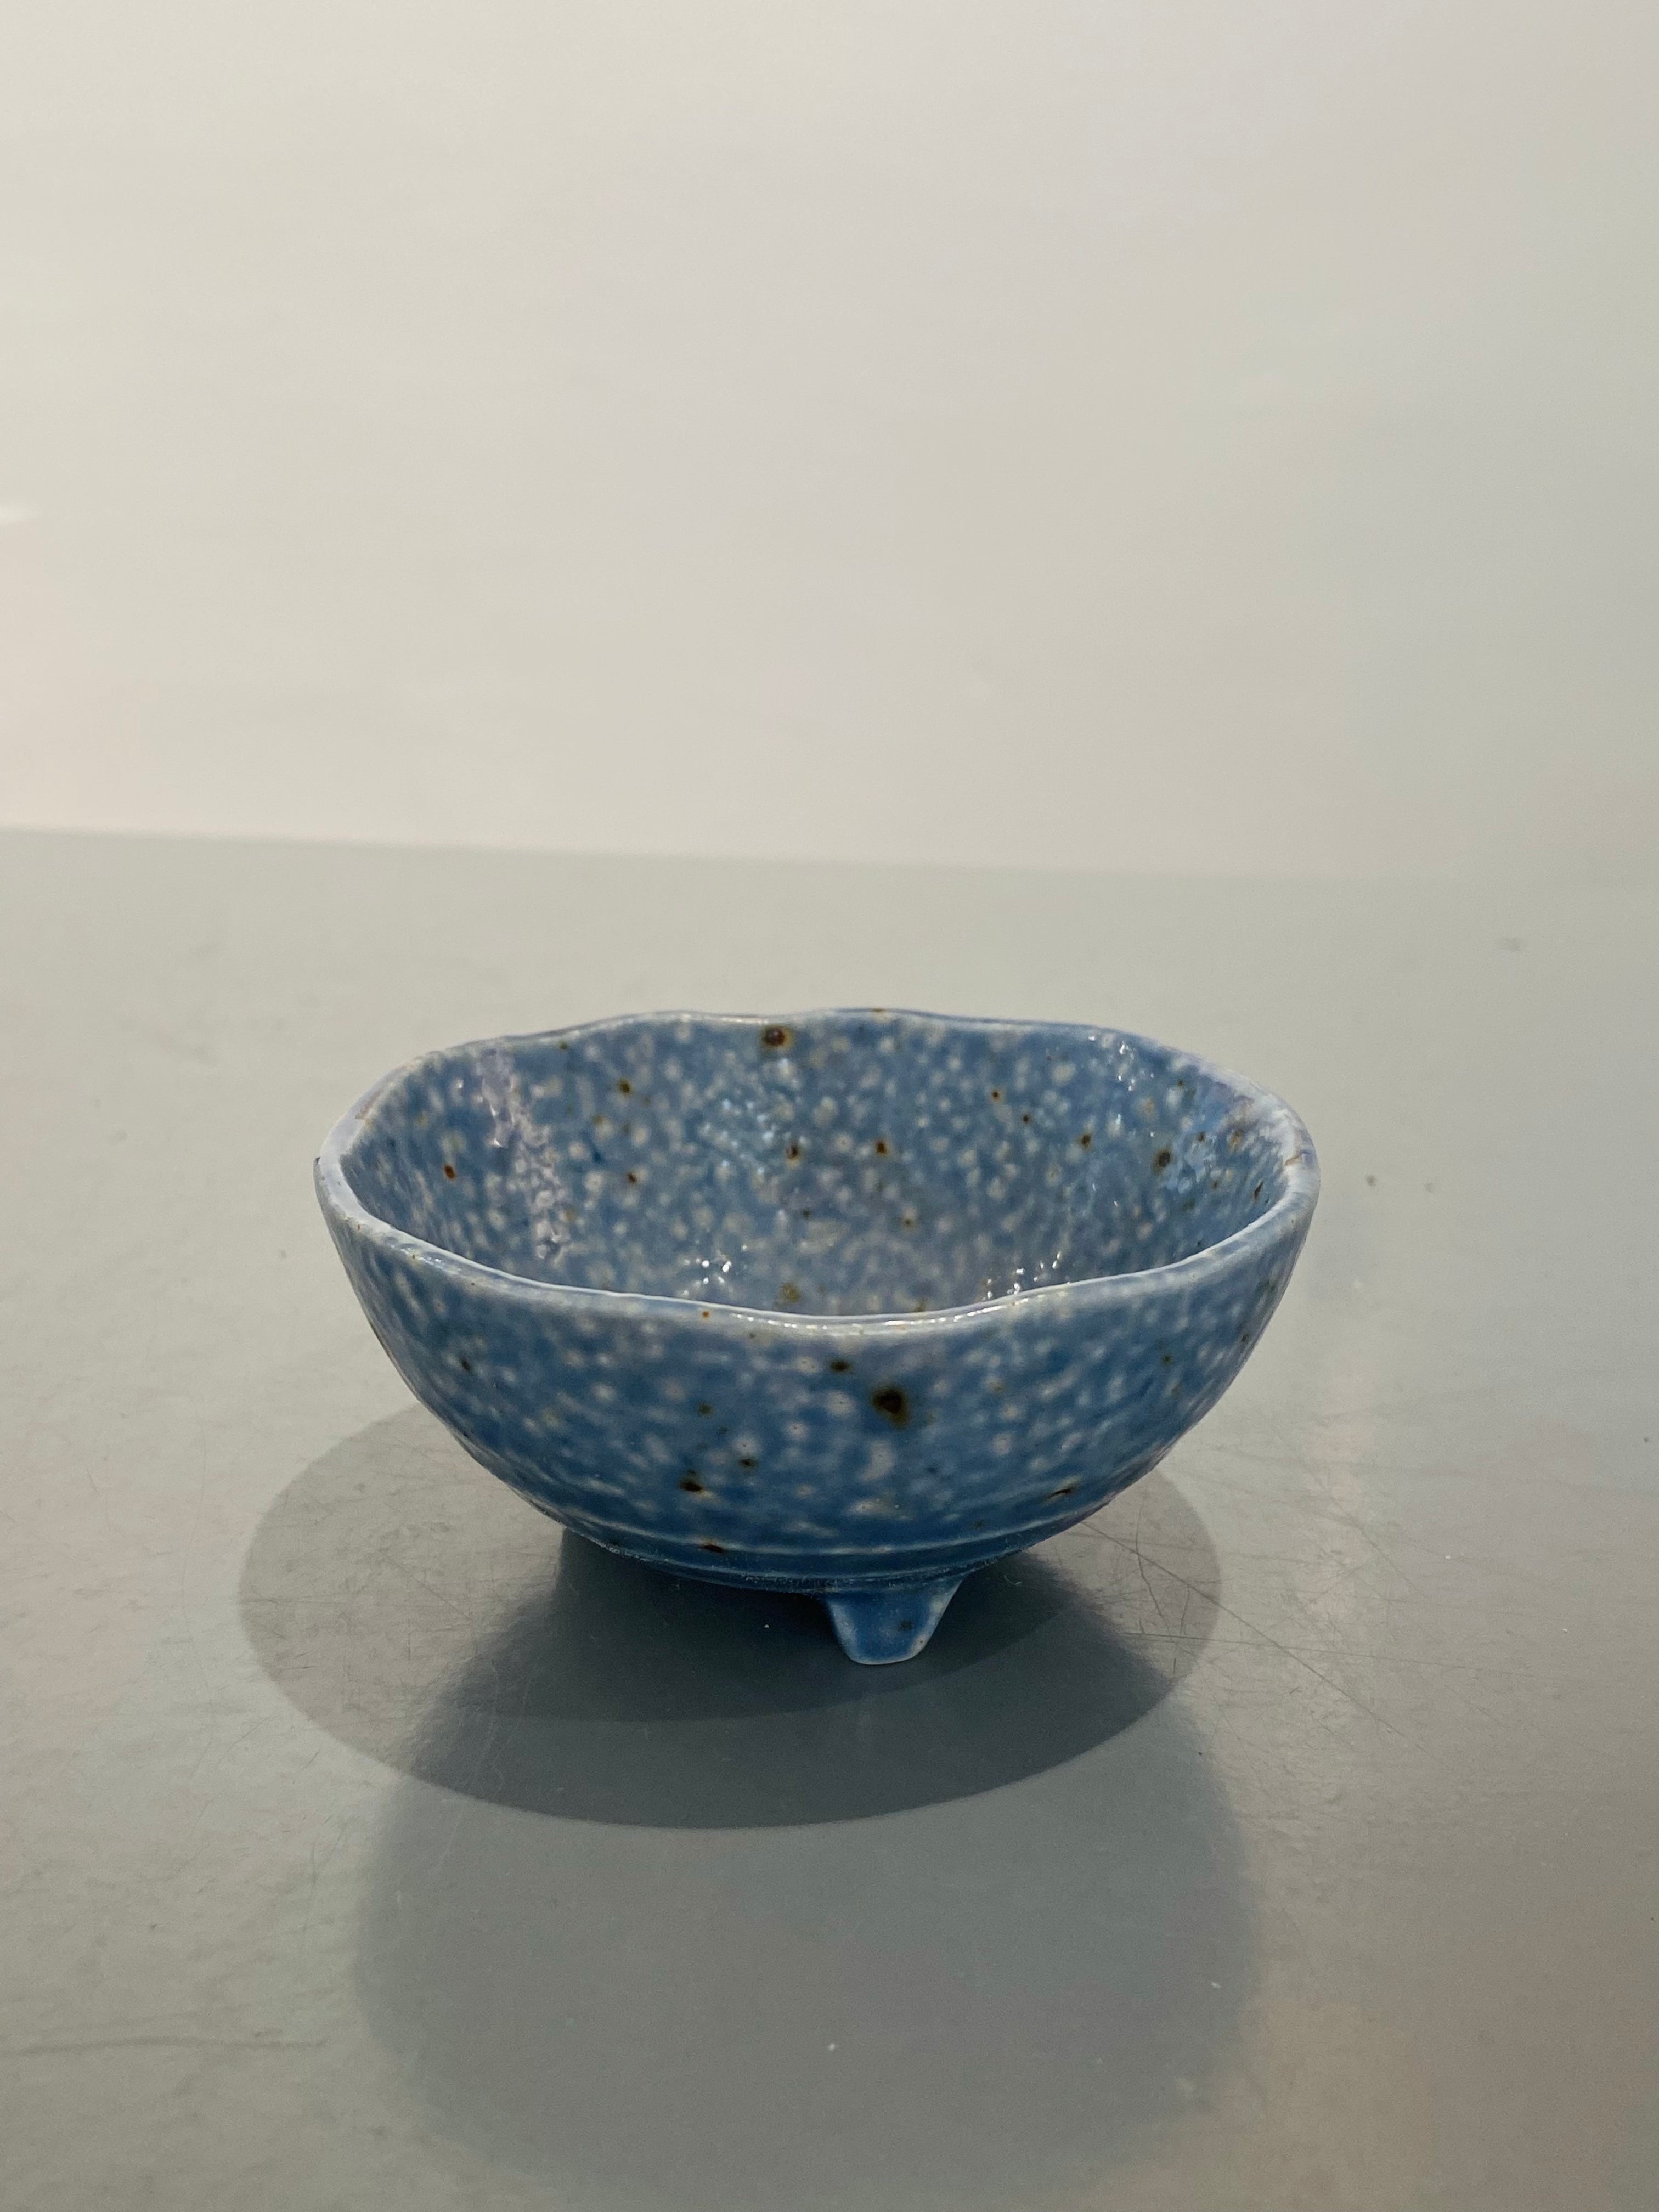 Light blue bowl with three feet